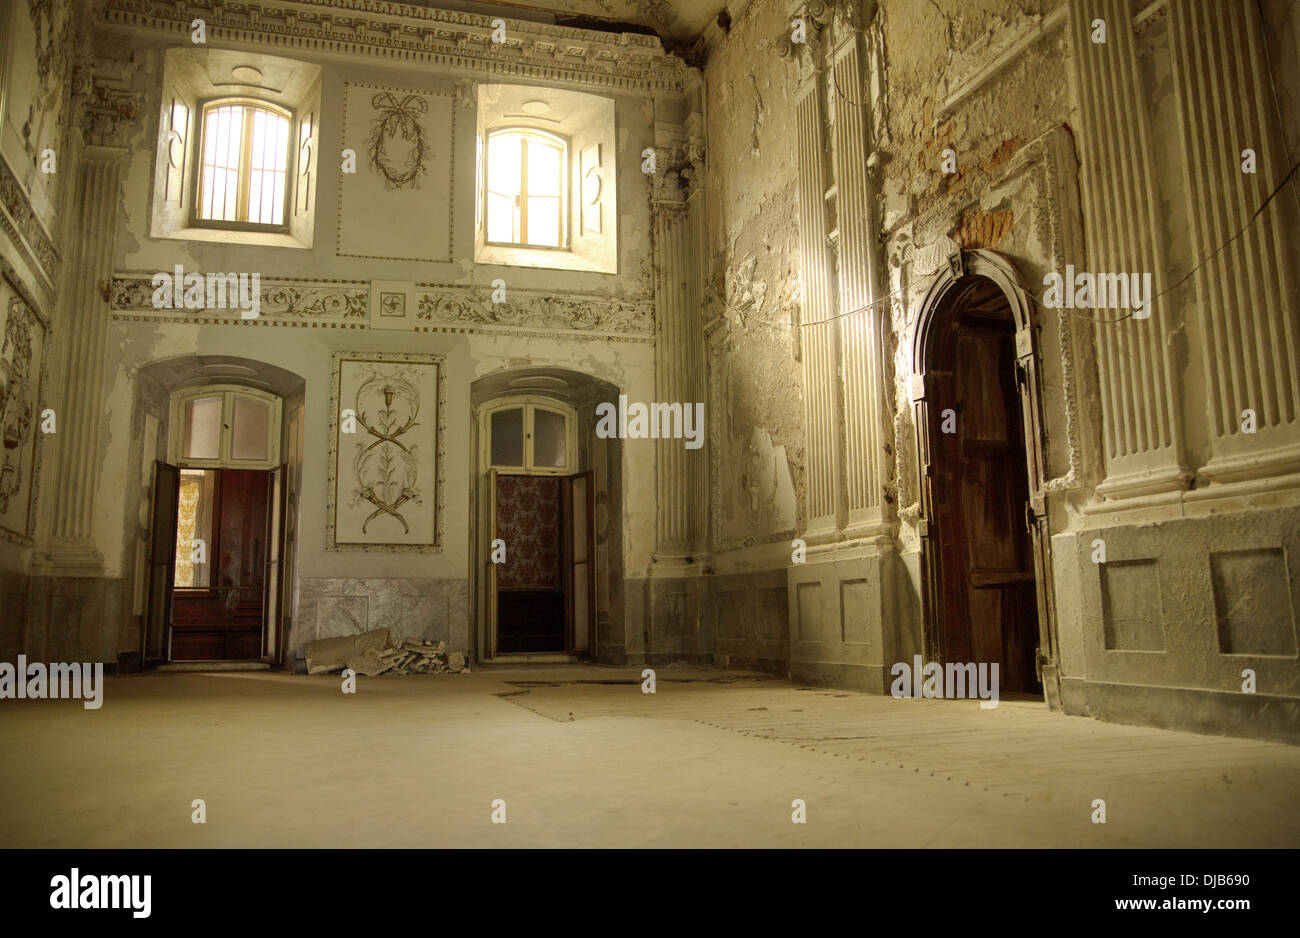 Helles Interieur im alten Palast Stockfoto